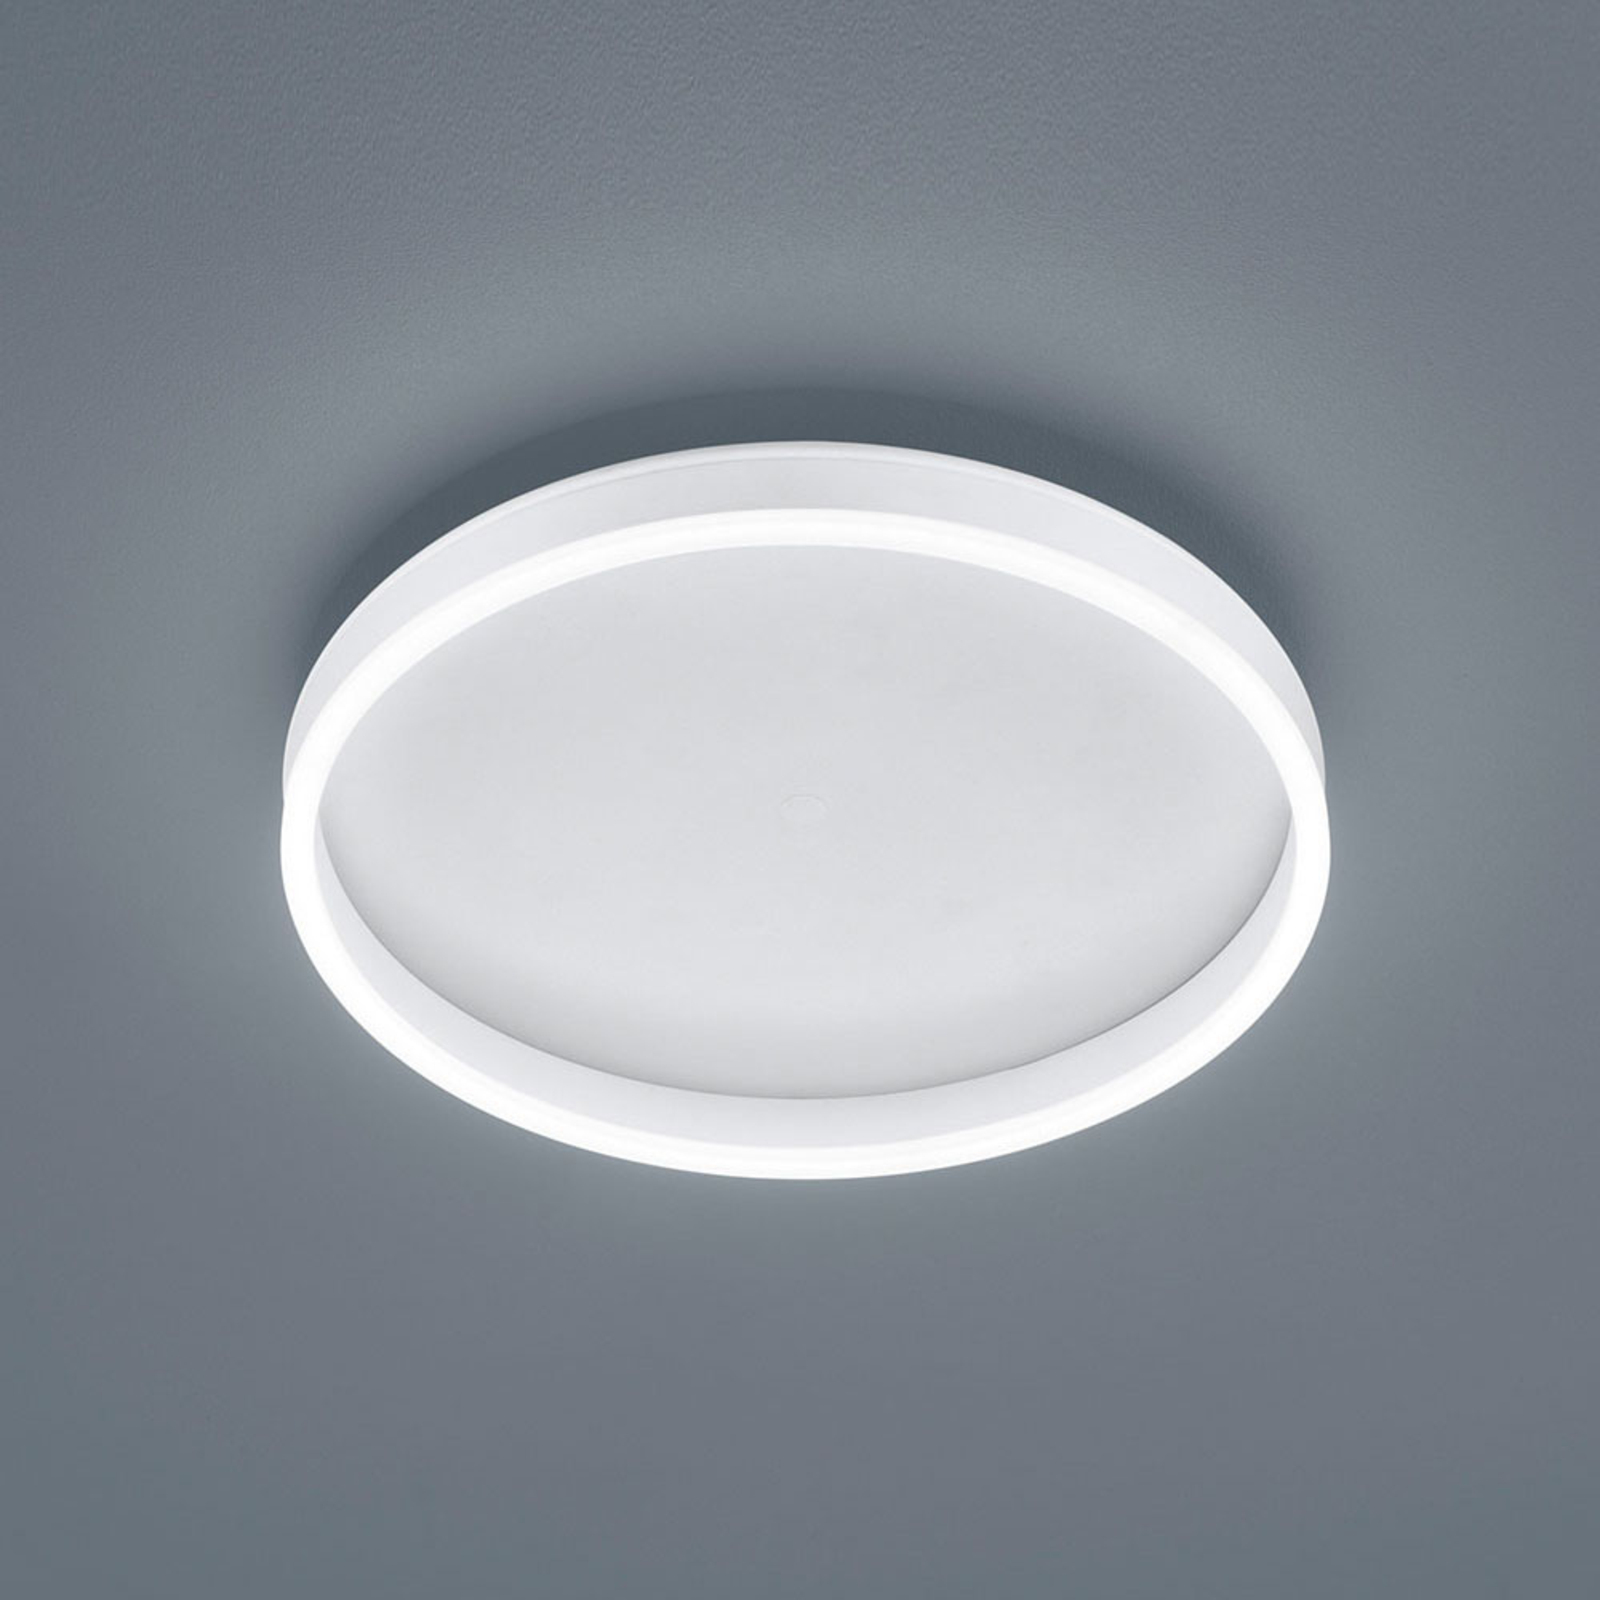 Helestra Sona plafonnier LED dimmable Ø40 cm blanc